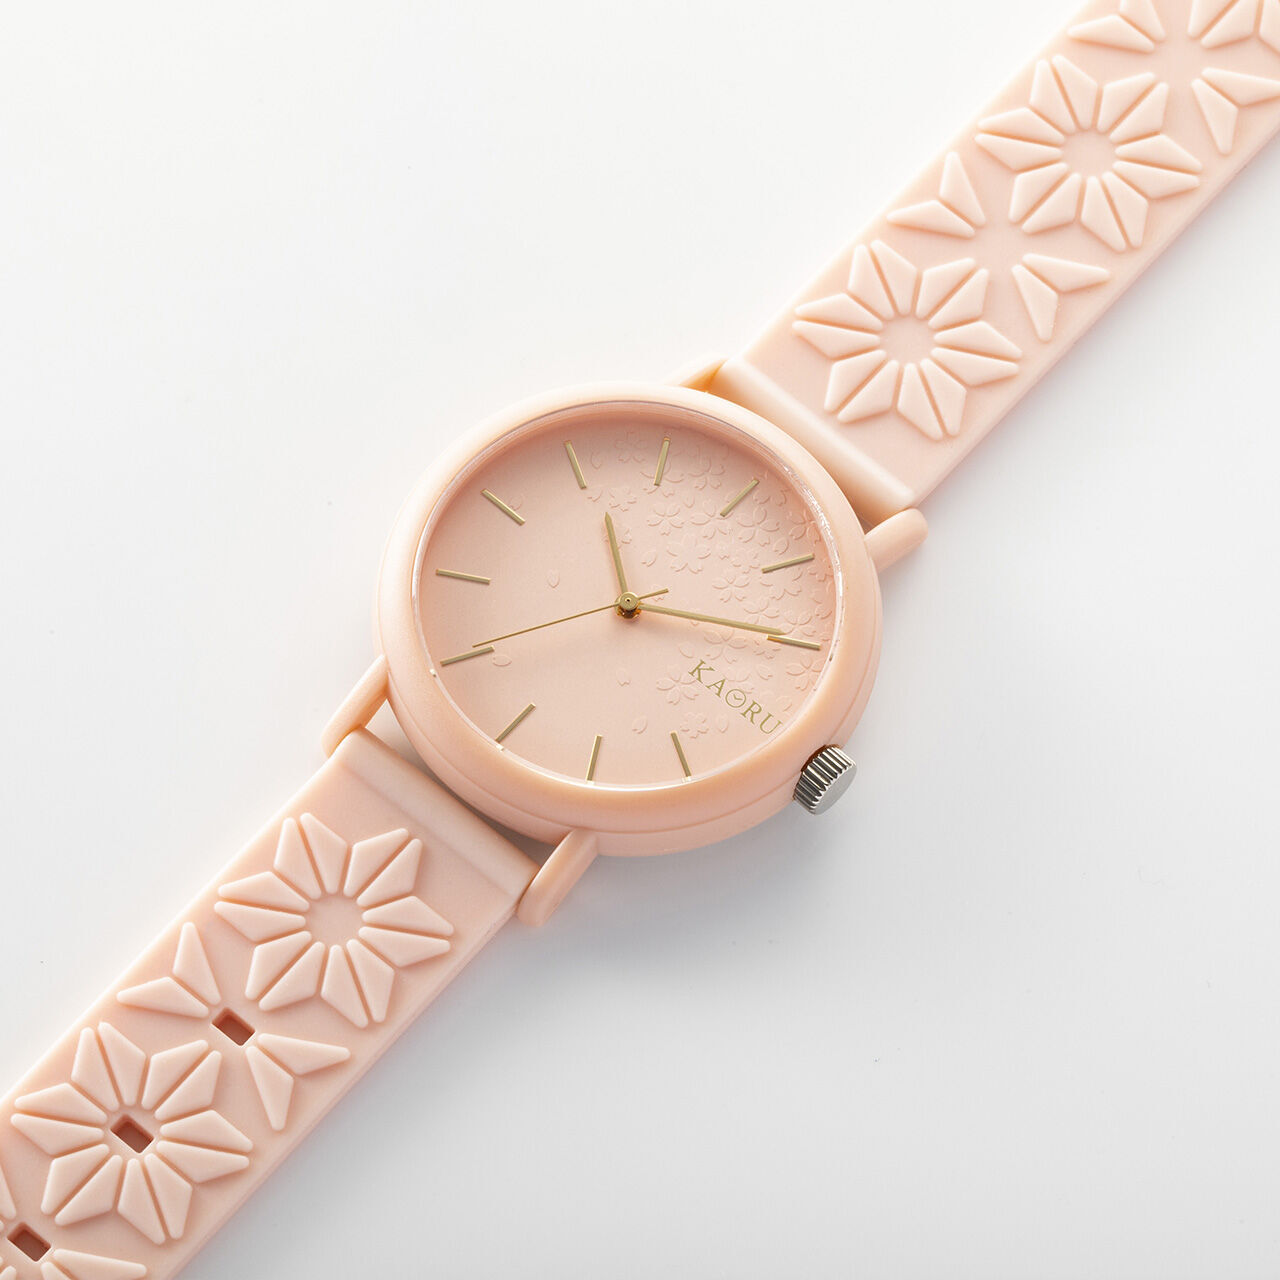 KAORU オリジナル 桜 サクラの香りがする腕時計 ピンクバンド KAORU001S2